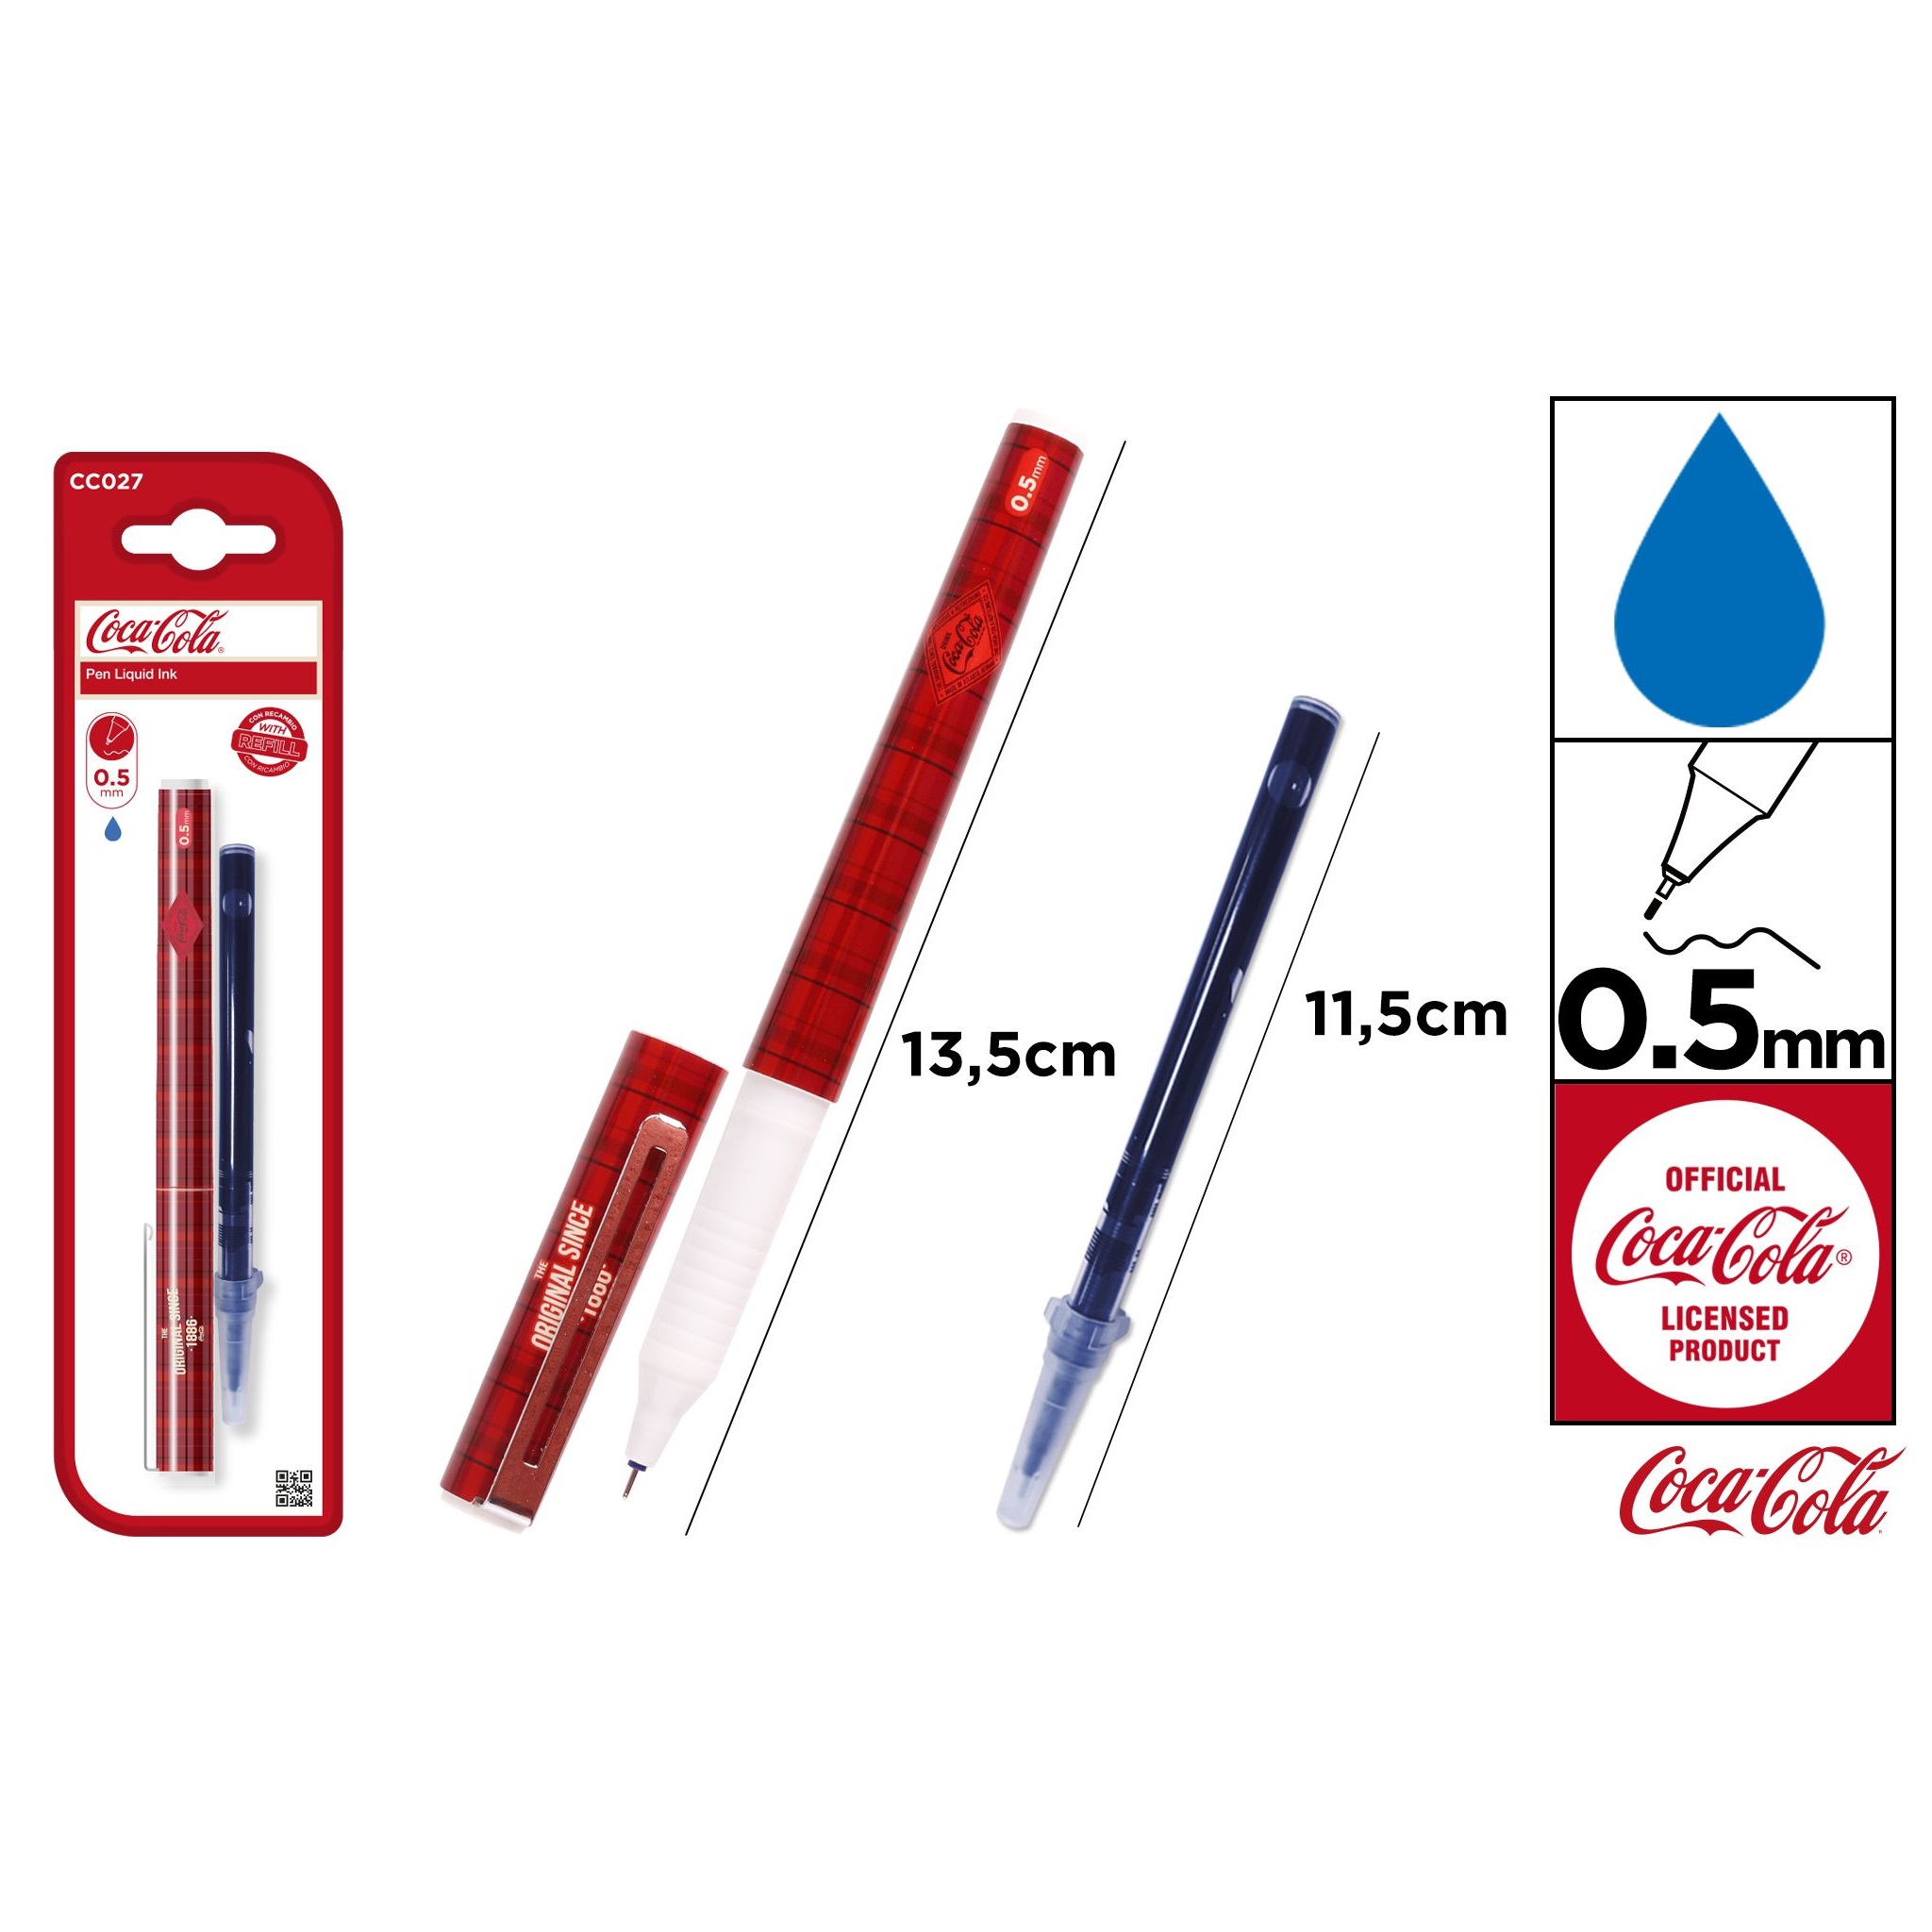 CC027 0.5mm Straight Liquid Pen Coca-Cola Co-branded Ballpoint Pen Comes with Refill